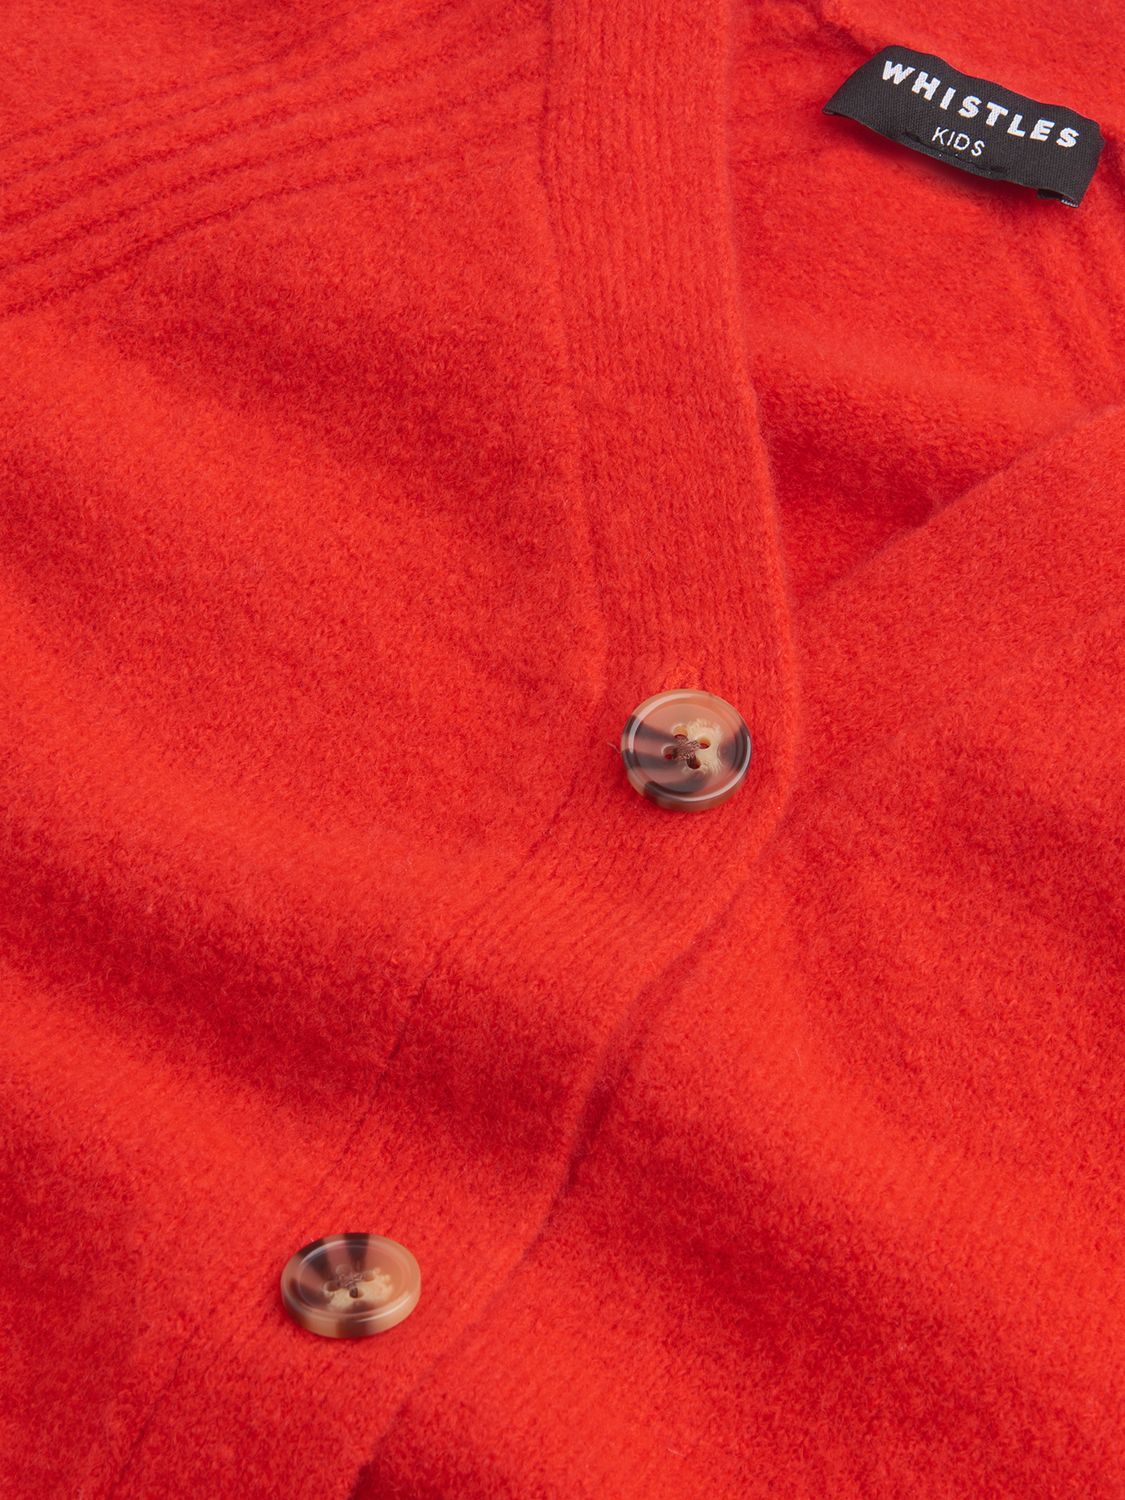 Whistles Kids' Textured Wool Blend Cardigan, Red, 3-4 years